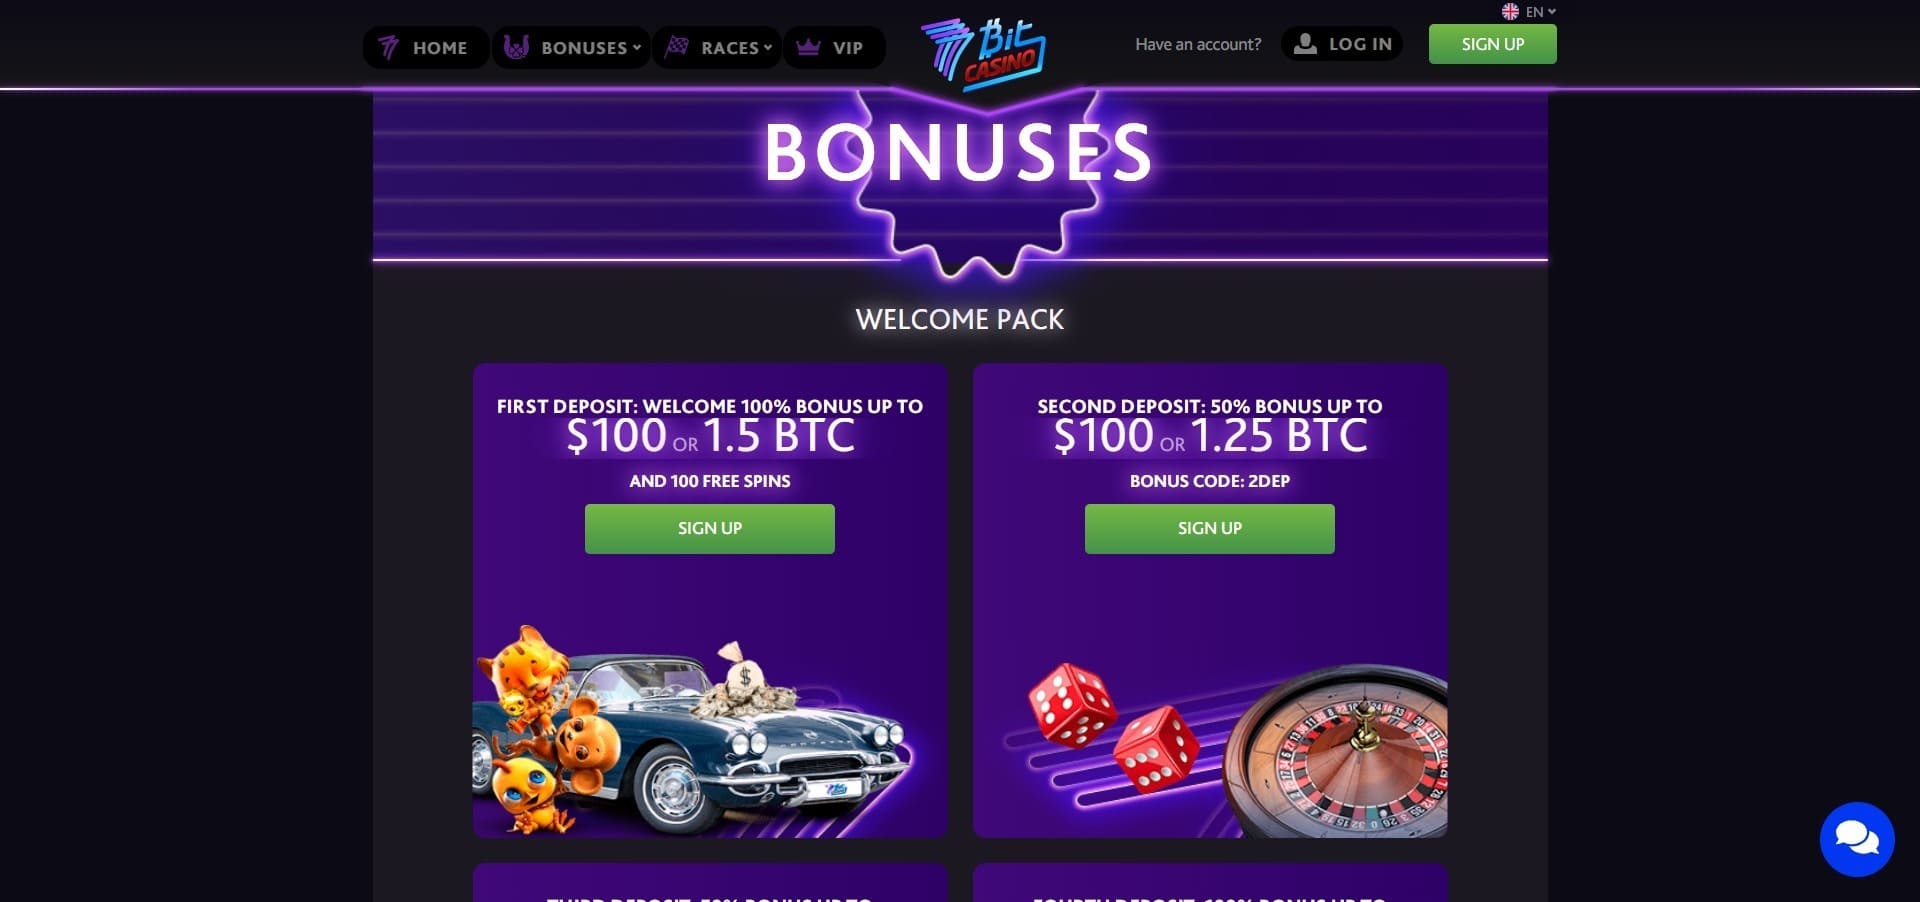 Bonuses 7bit Casino